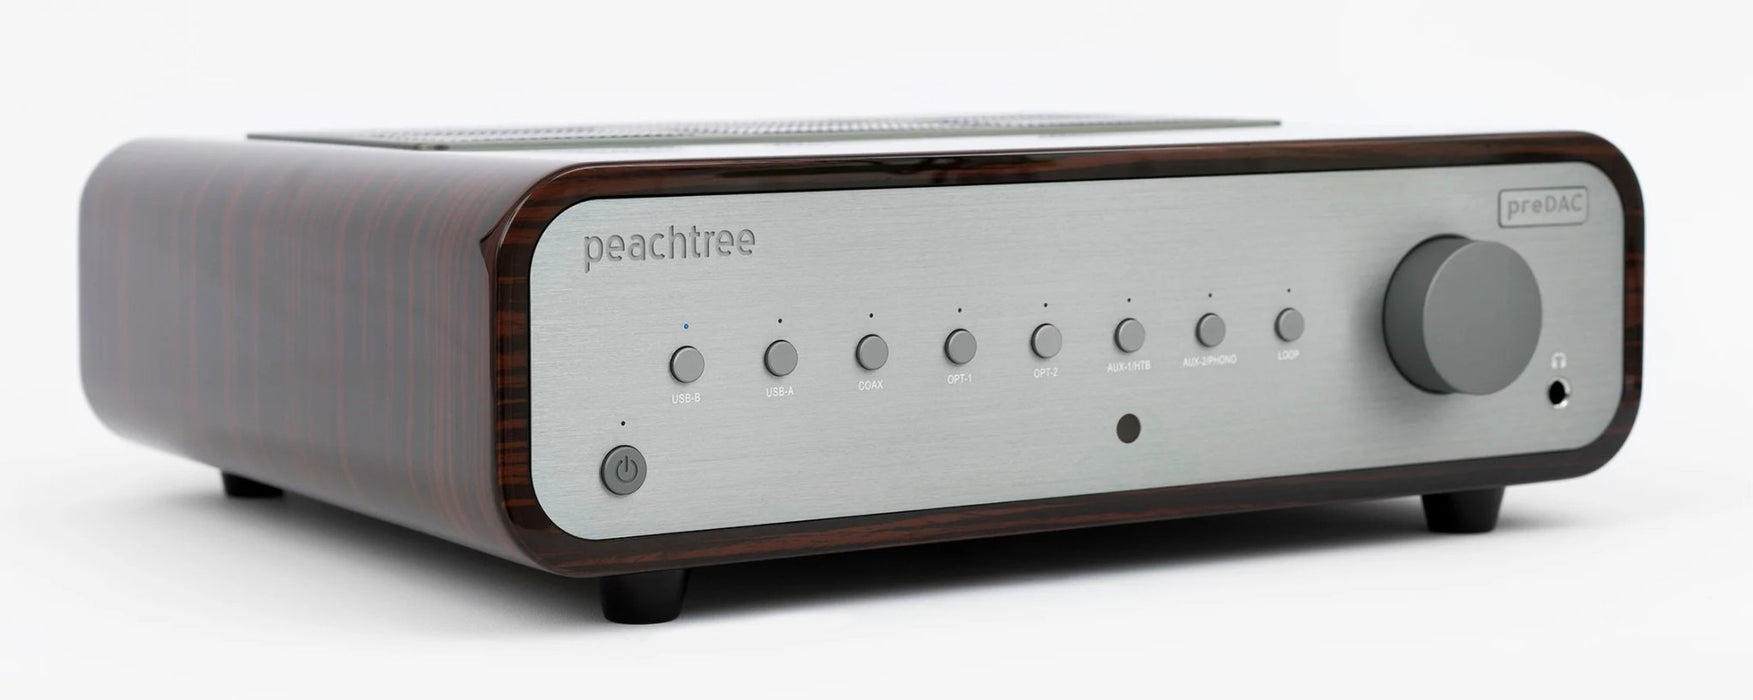 Peachtree PreDAC Preamplifier - The Audio Co.